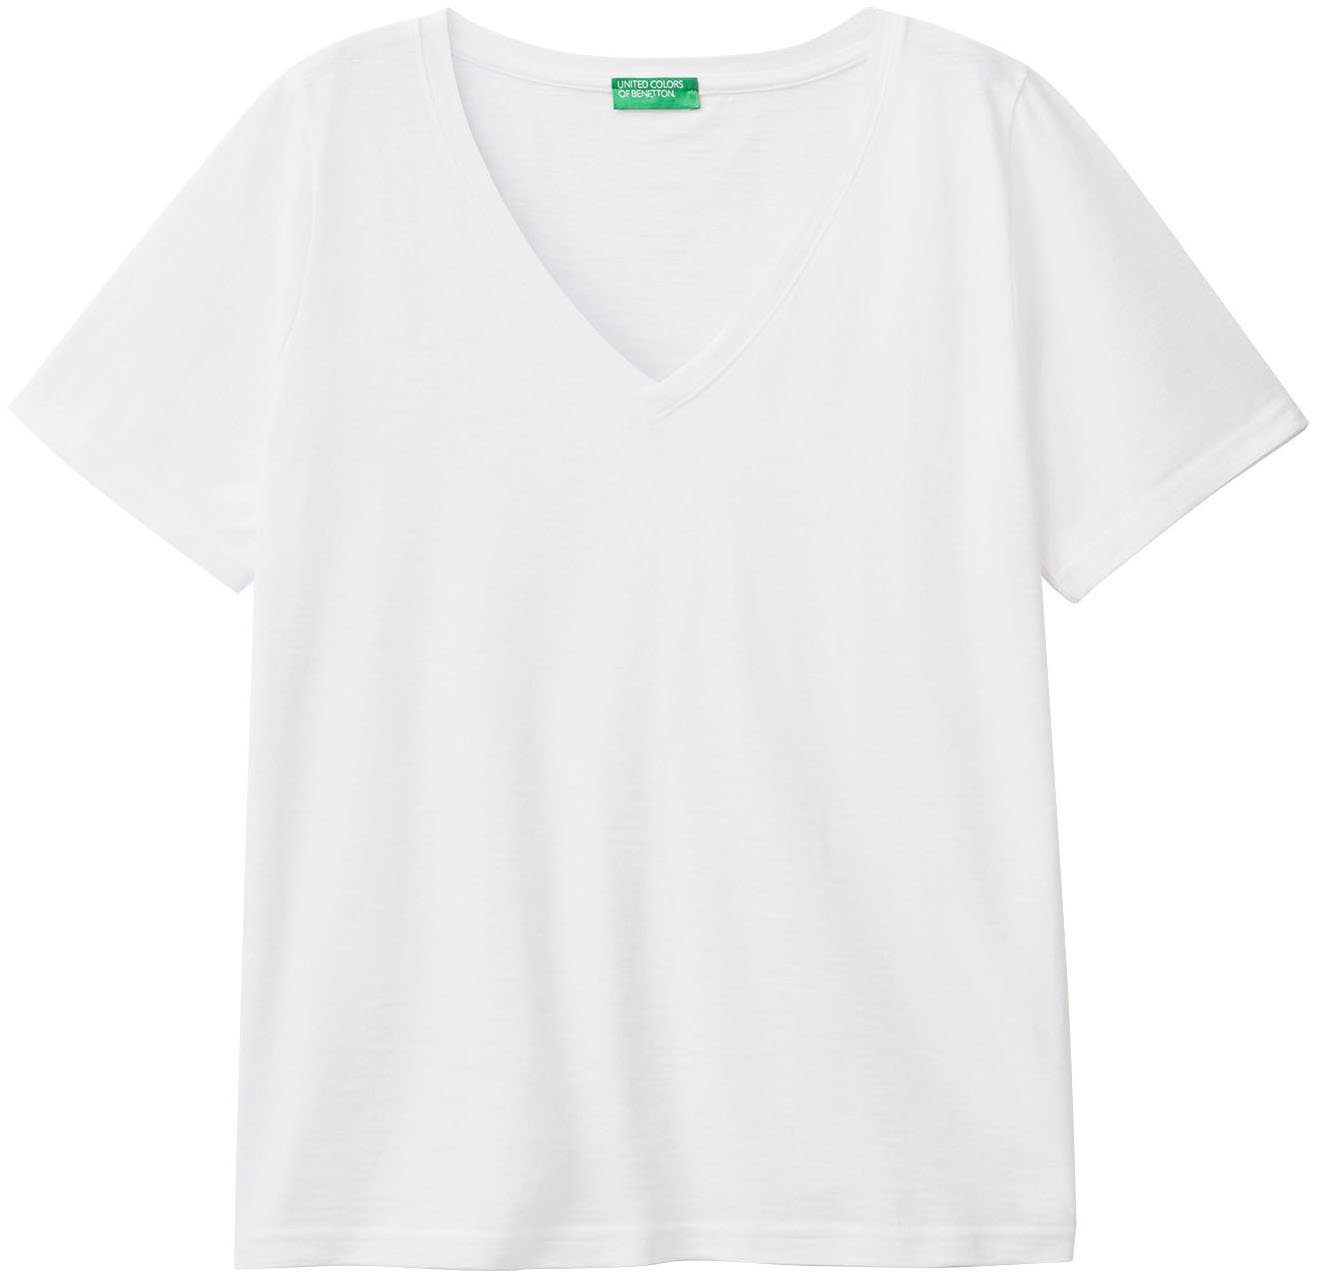 United Colors of Benetton wollweiß aus Flammgarnjersey T-Shirt